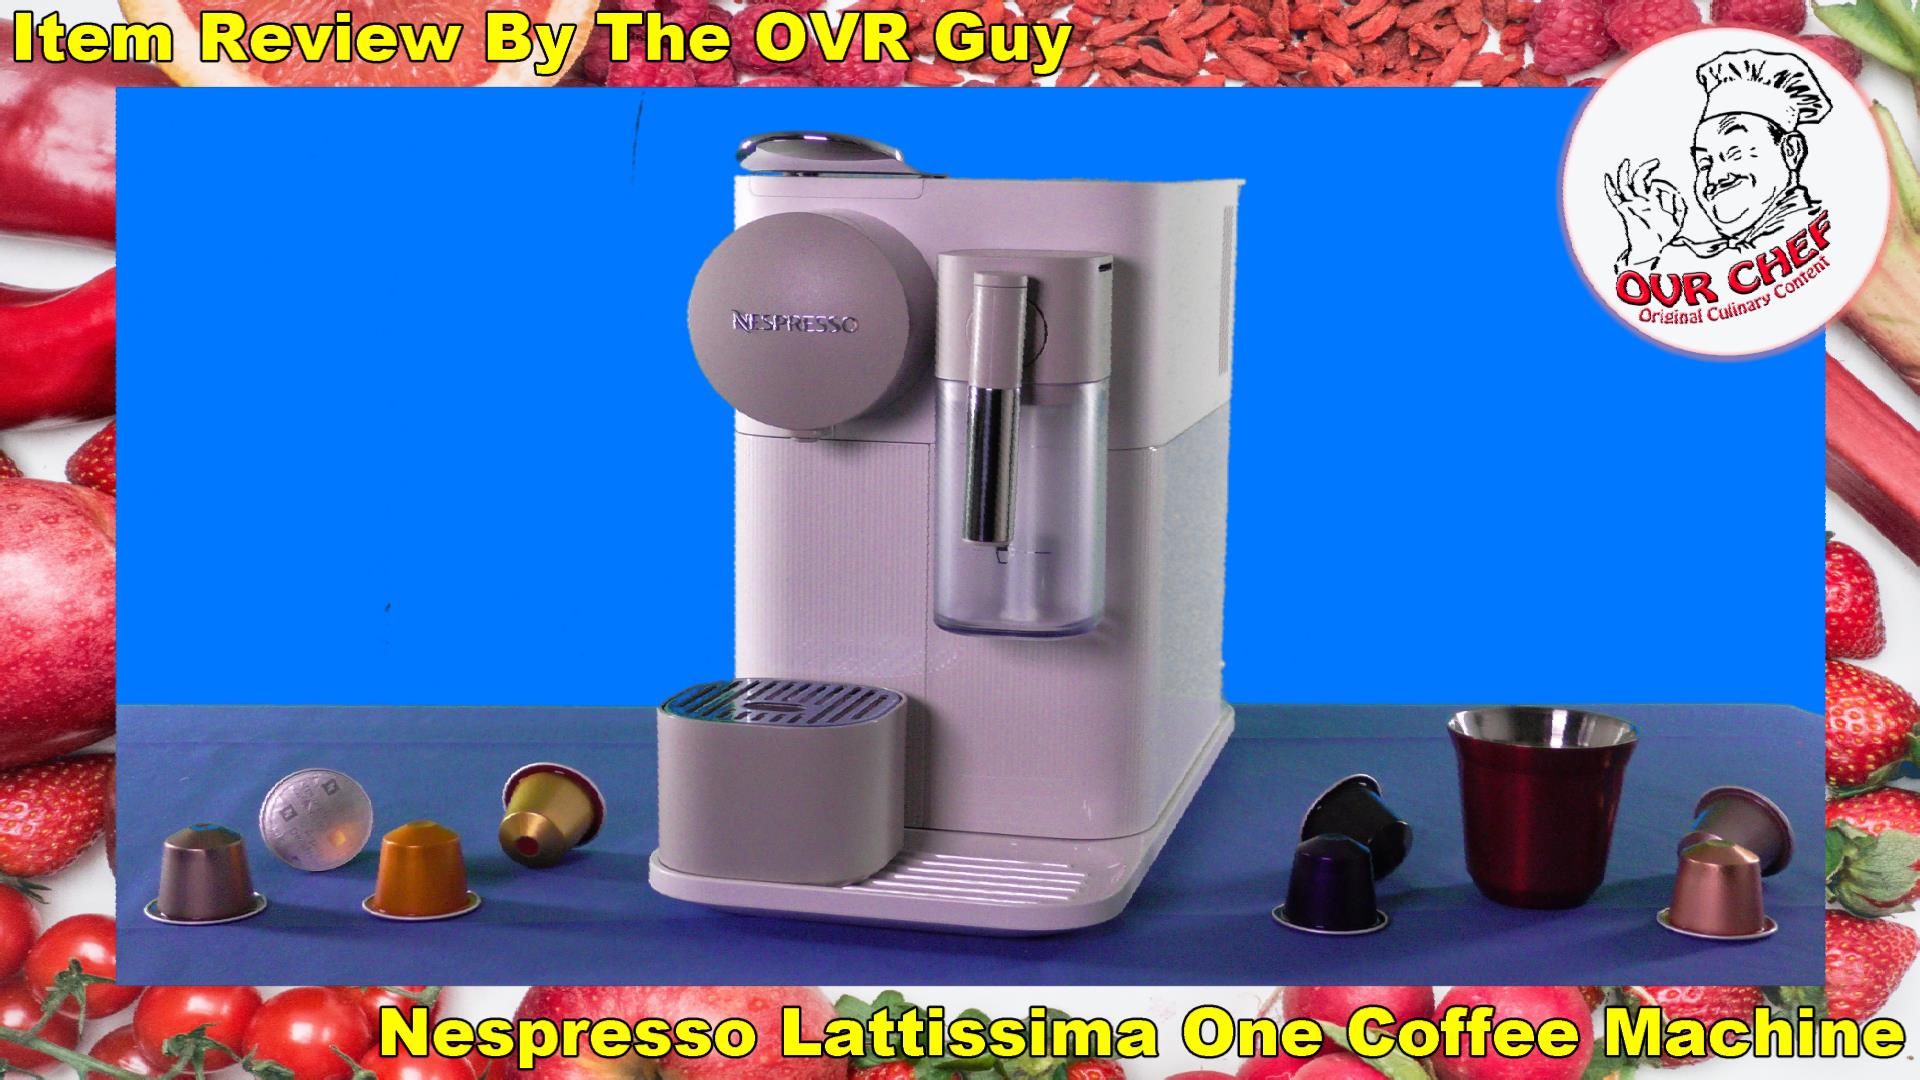 Nespresso Lattissima One Coffee Machine Review (Thumbnail)